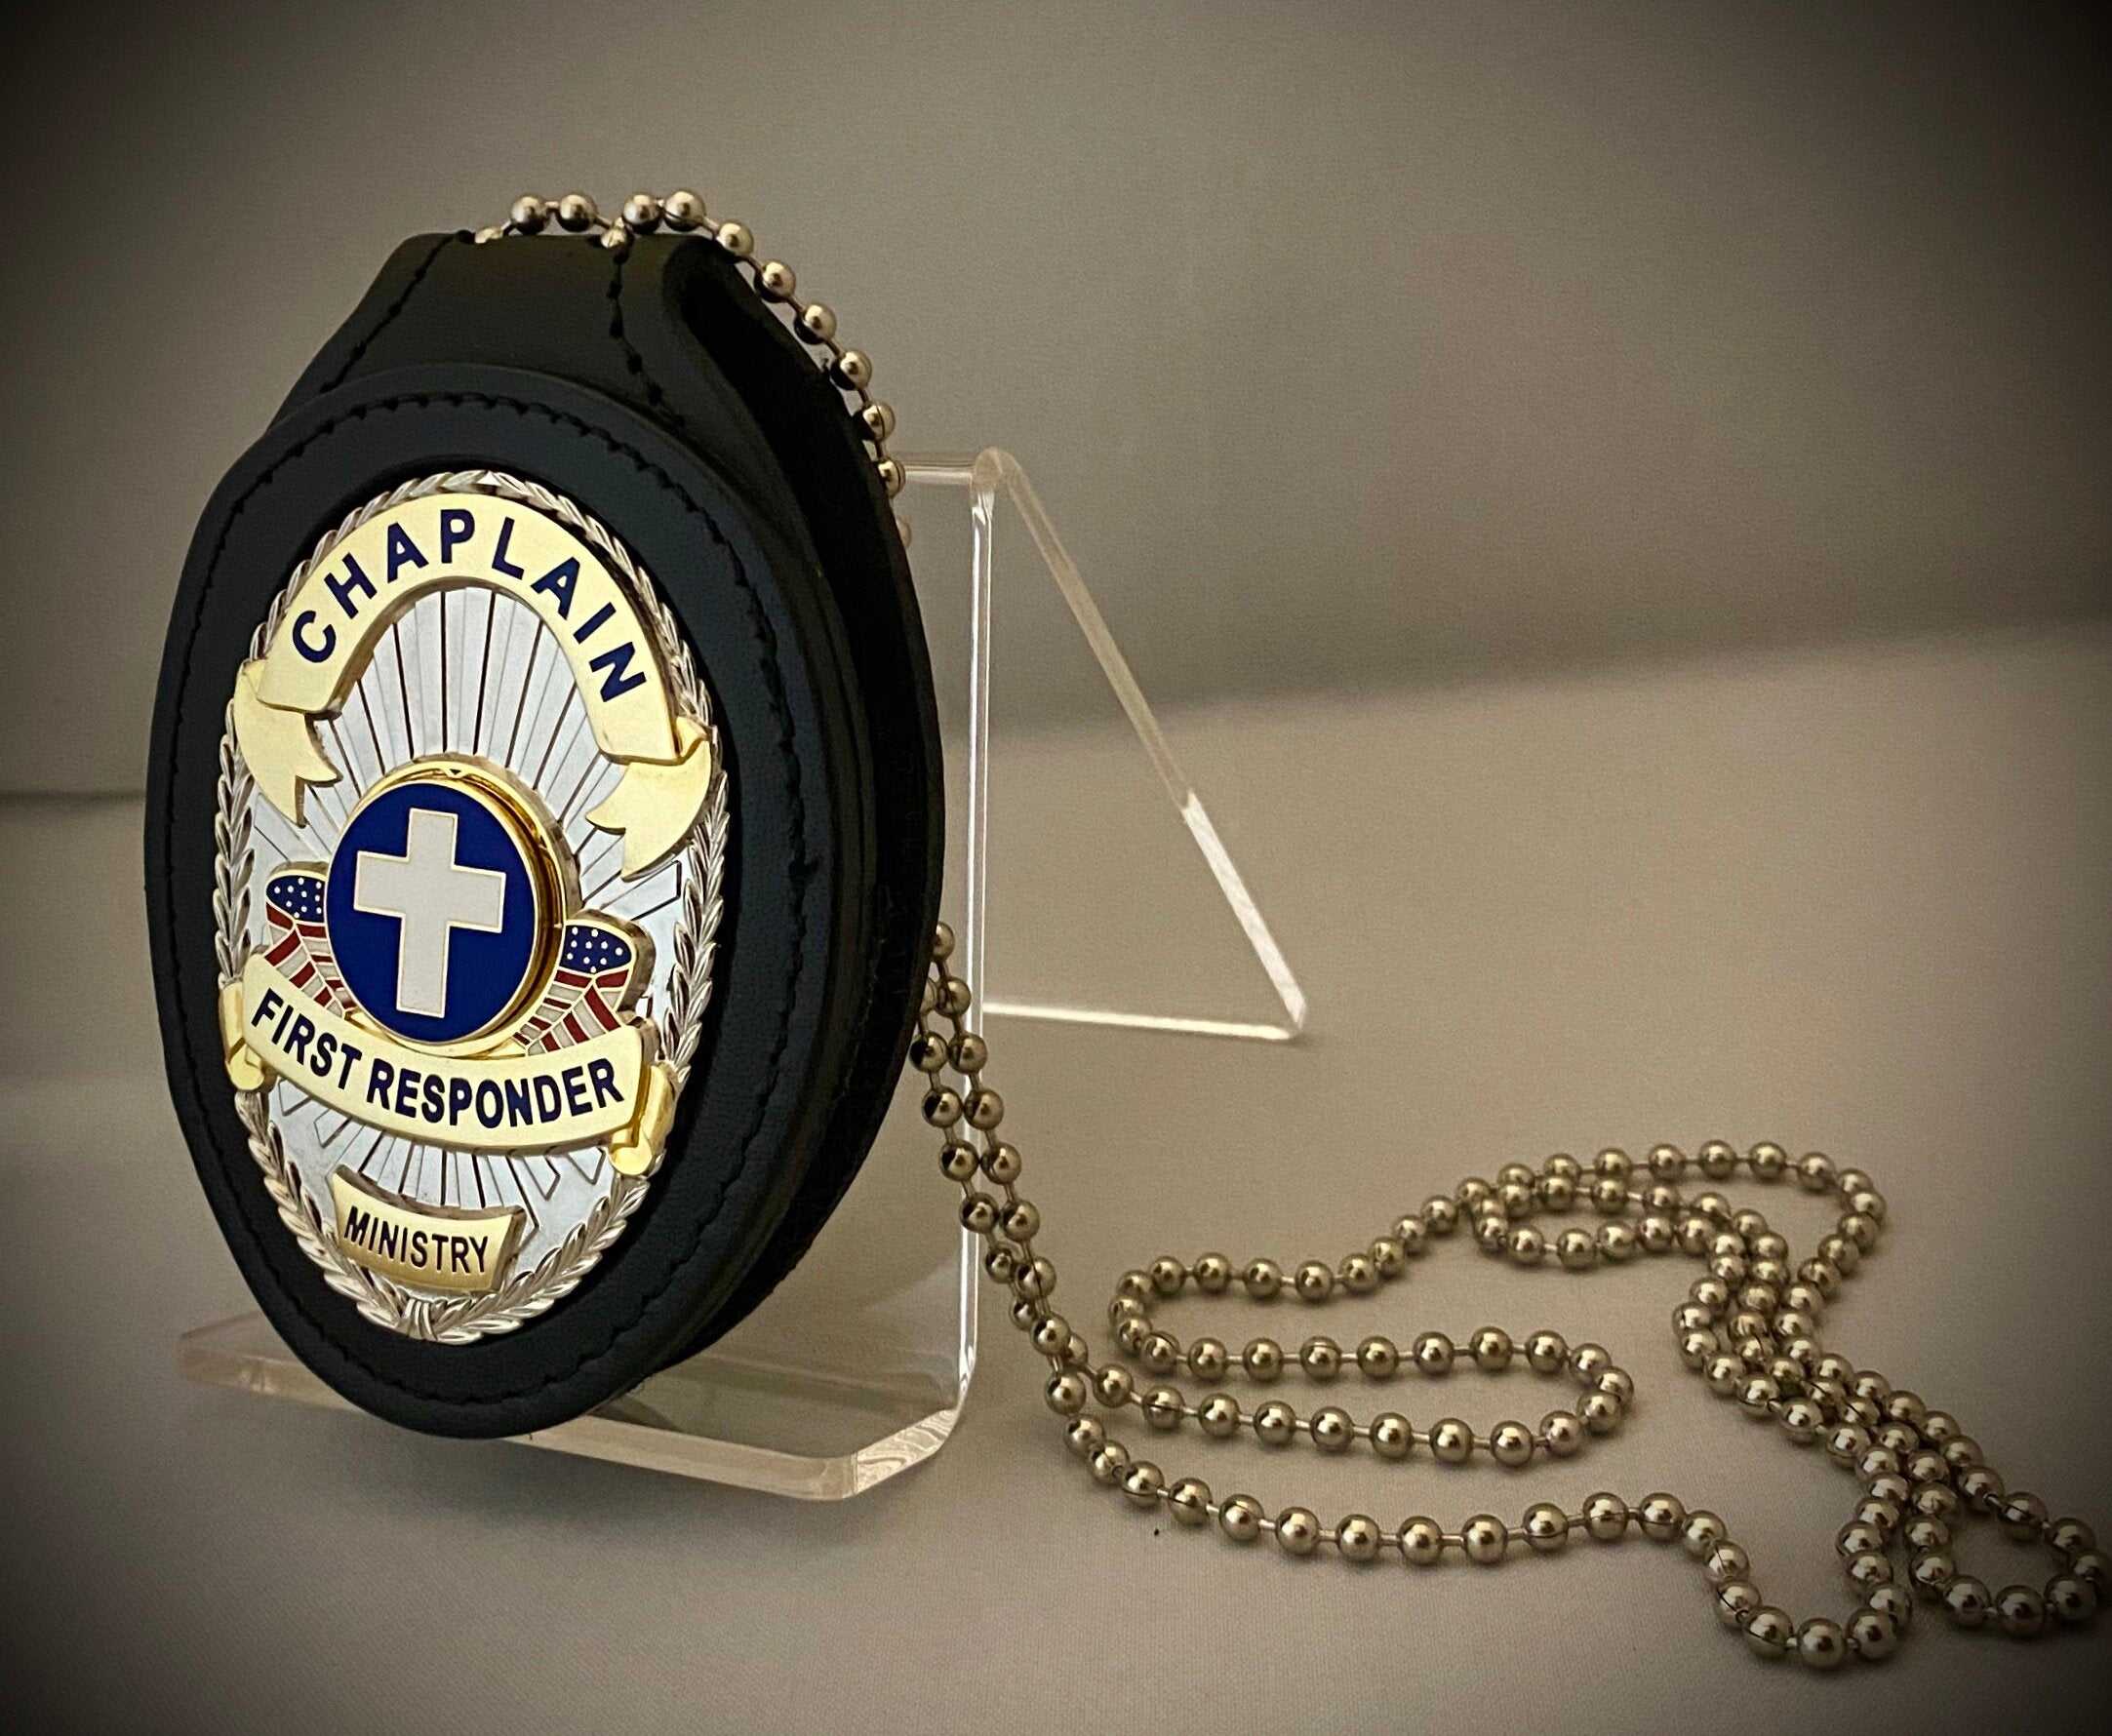 Chaplain First Responder Badge with (Black or Brown) leather belt clip holder